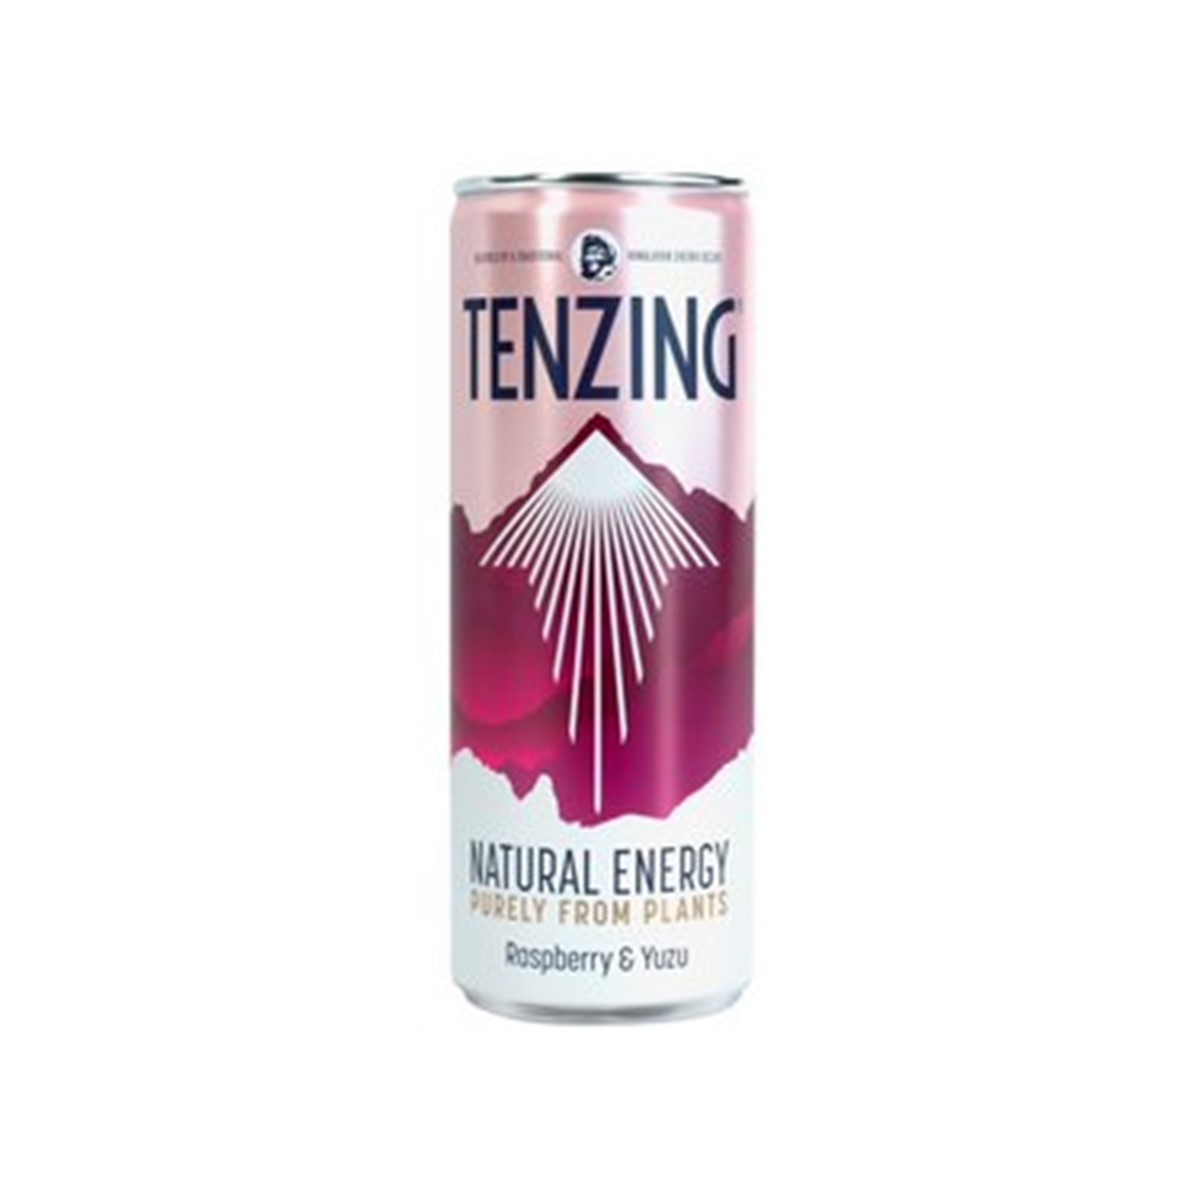 Tenzing Raspberry & Yuzu - 24x250ml cans